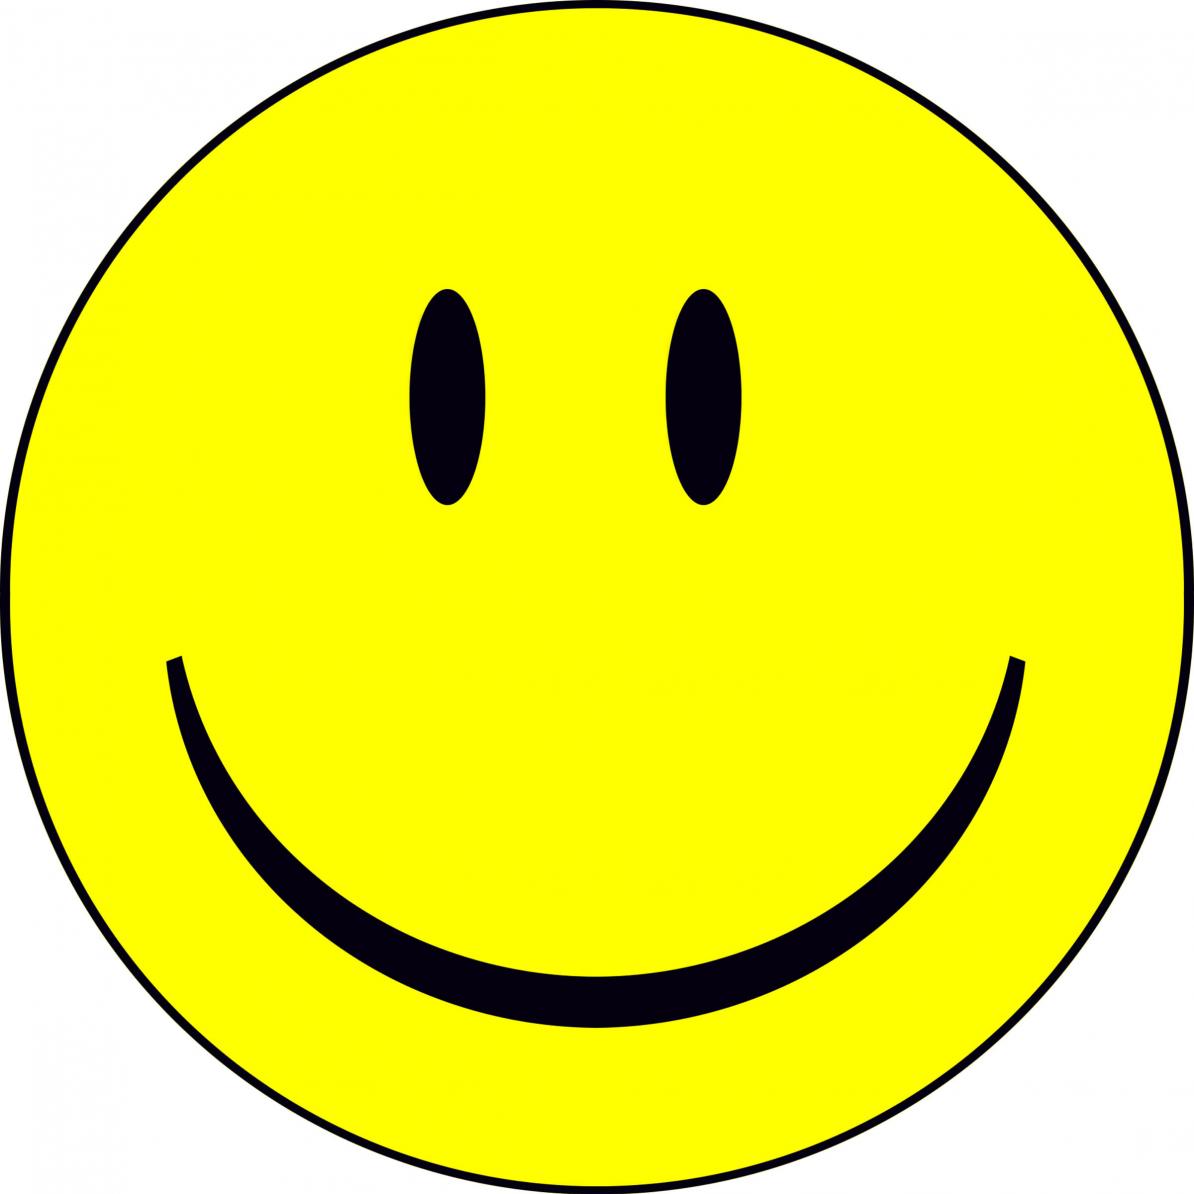 ... Smiley Face Clip Art | Smile Day Site ...